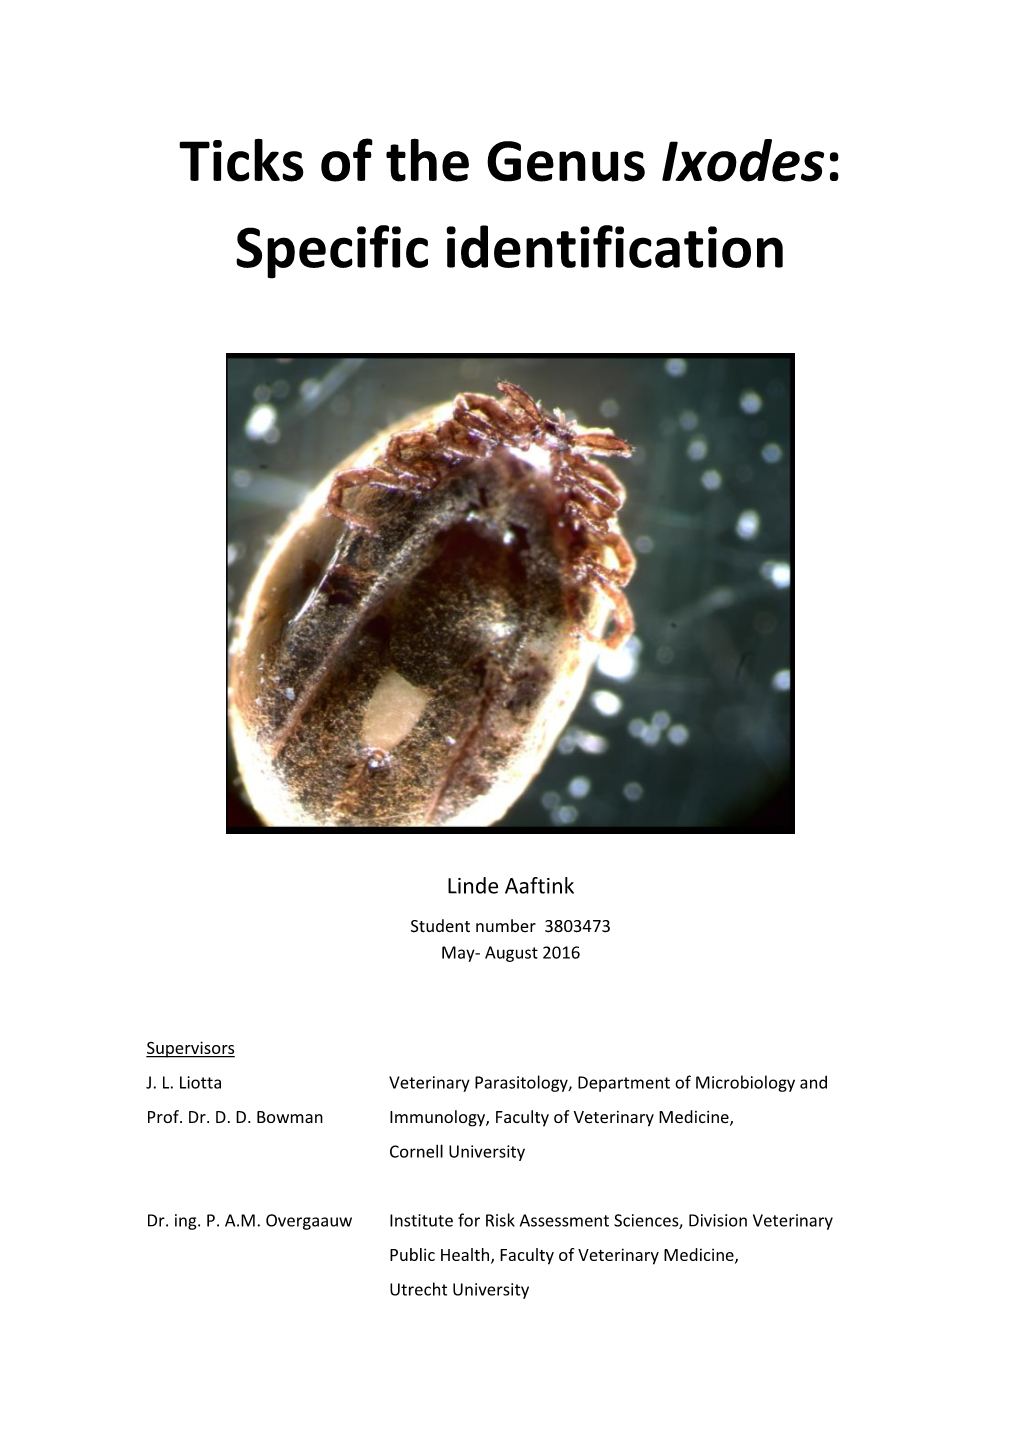 Ticks of the Genus Ixodes: Specific Identification